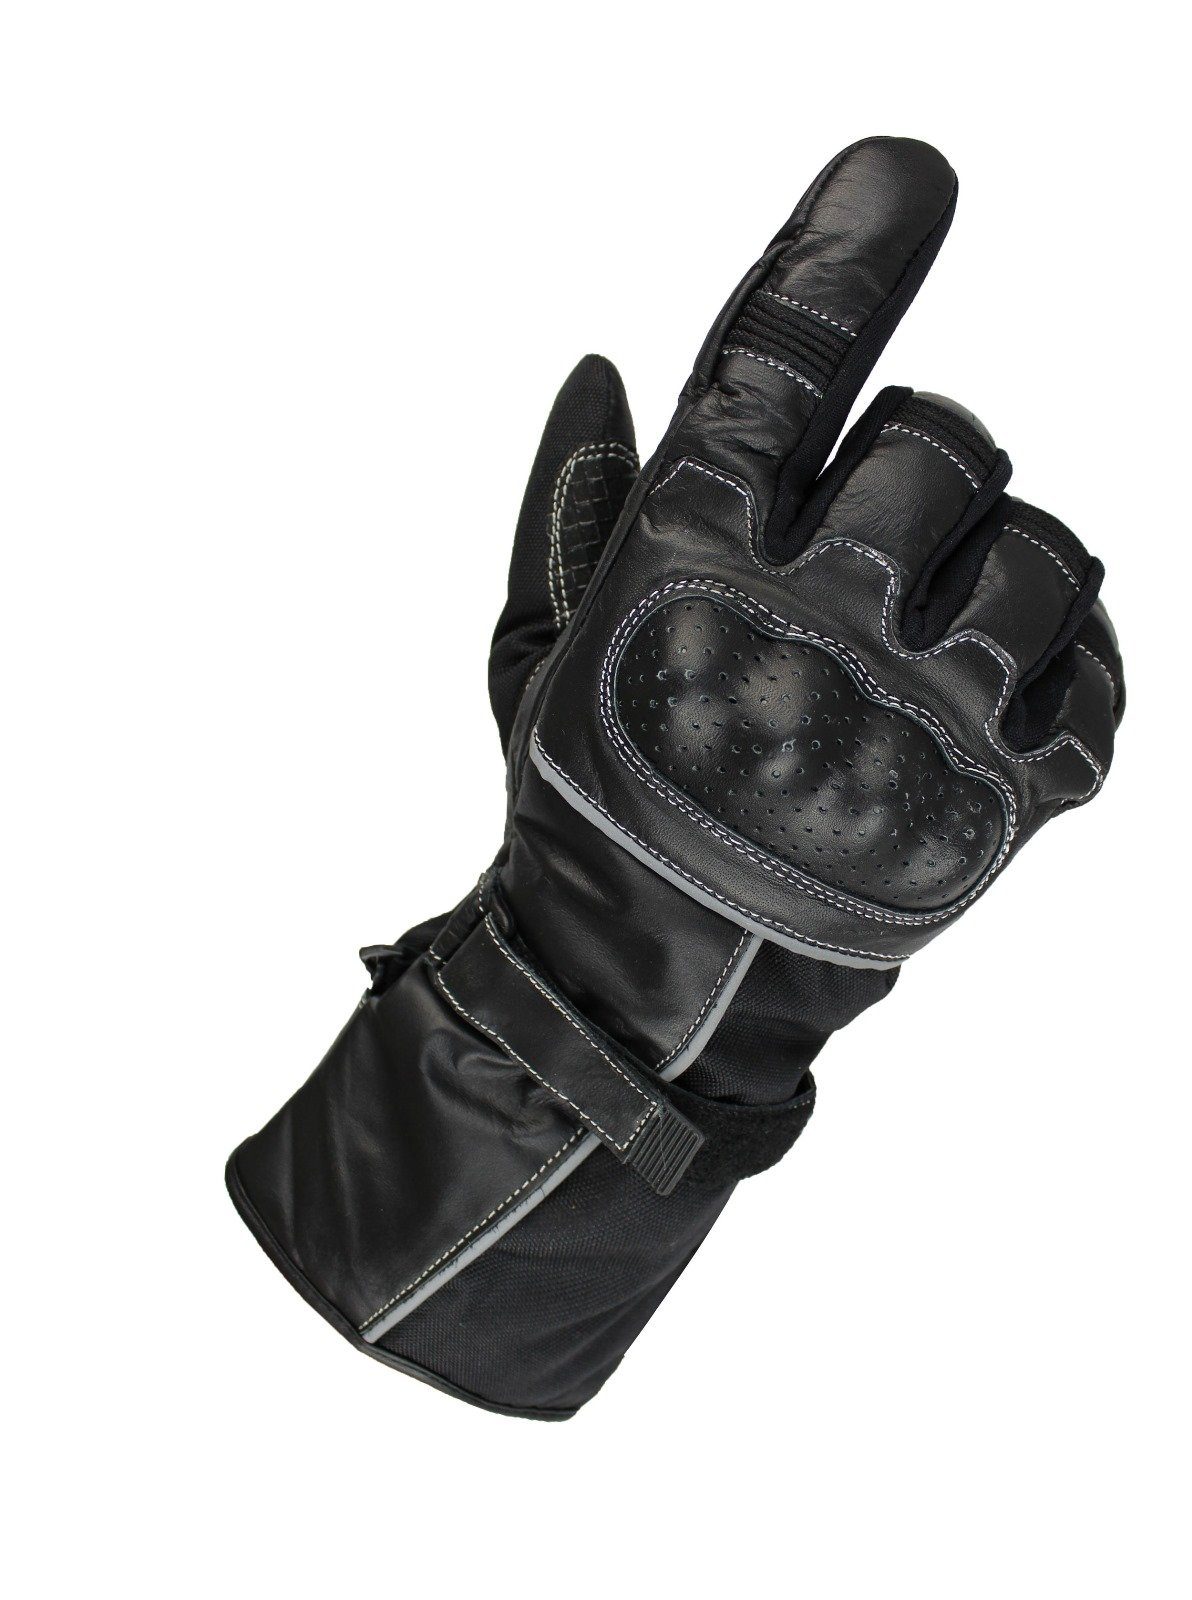 Biker Alpha Custom Winddicht Handschuhe Material + Winter Handschuhe + + Funktion) Racing Wasserdicht Motorradhandschuhe Atmungsaktiv Schwarz für Speeds (Touchscreen Reflektierende